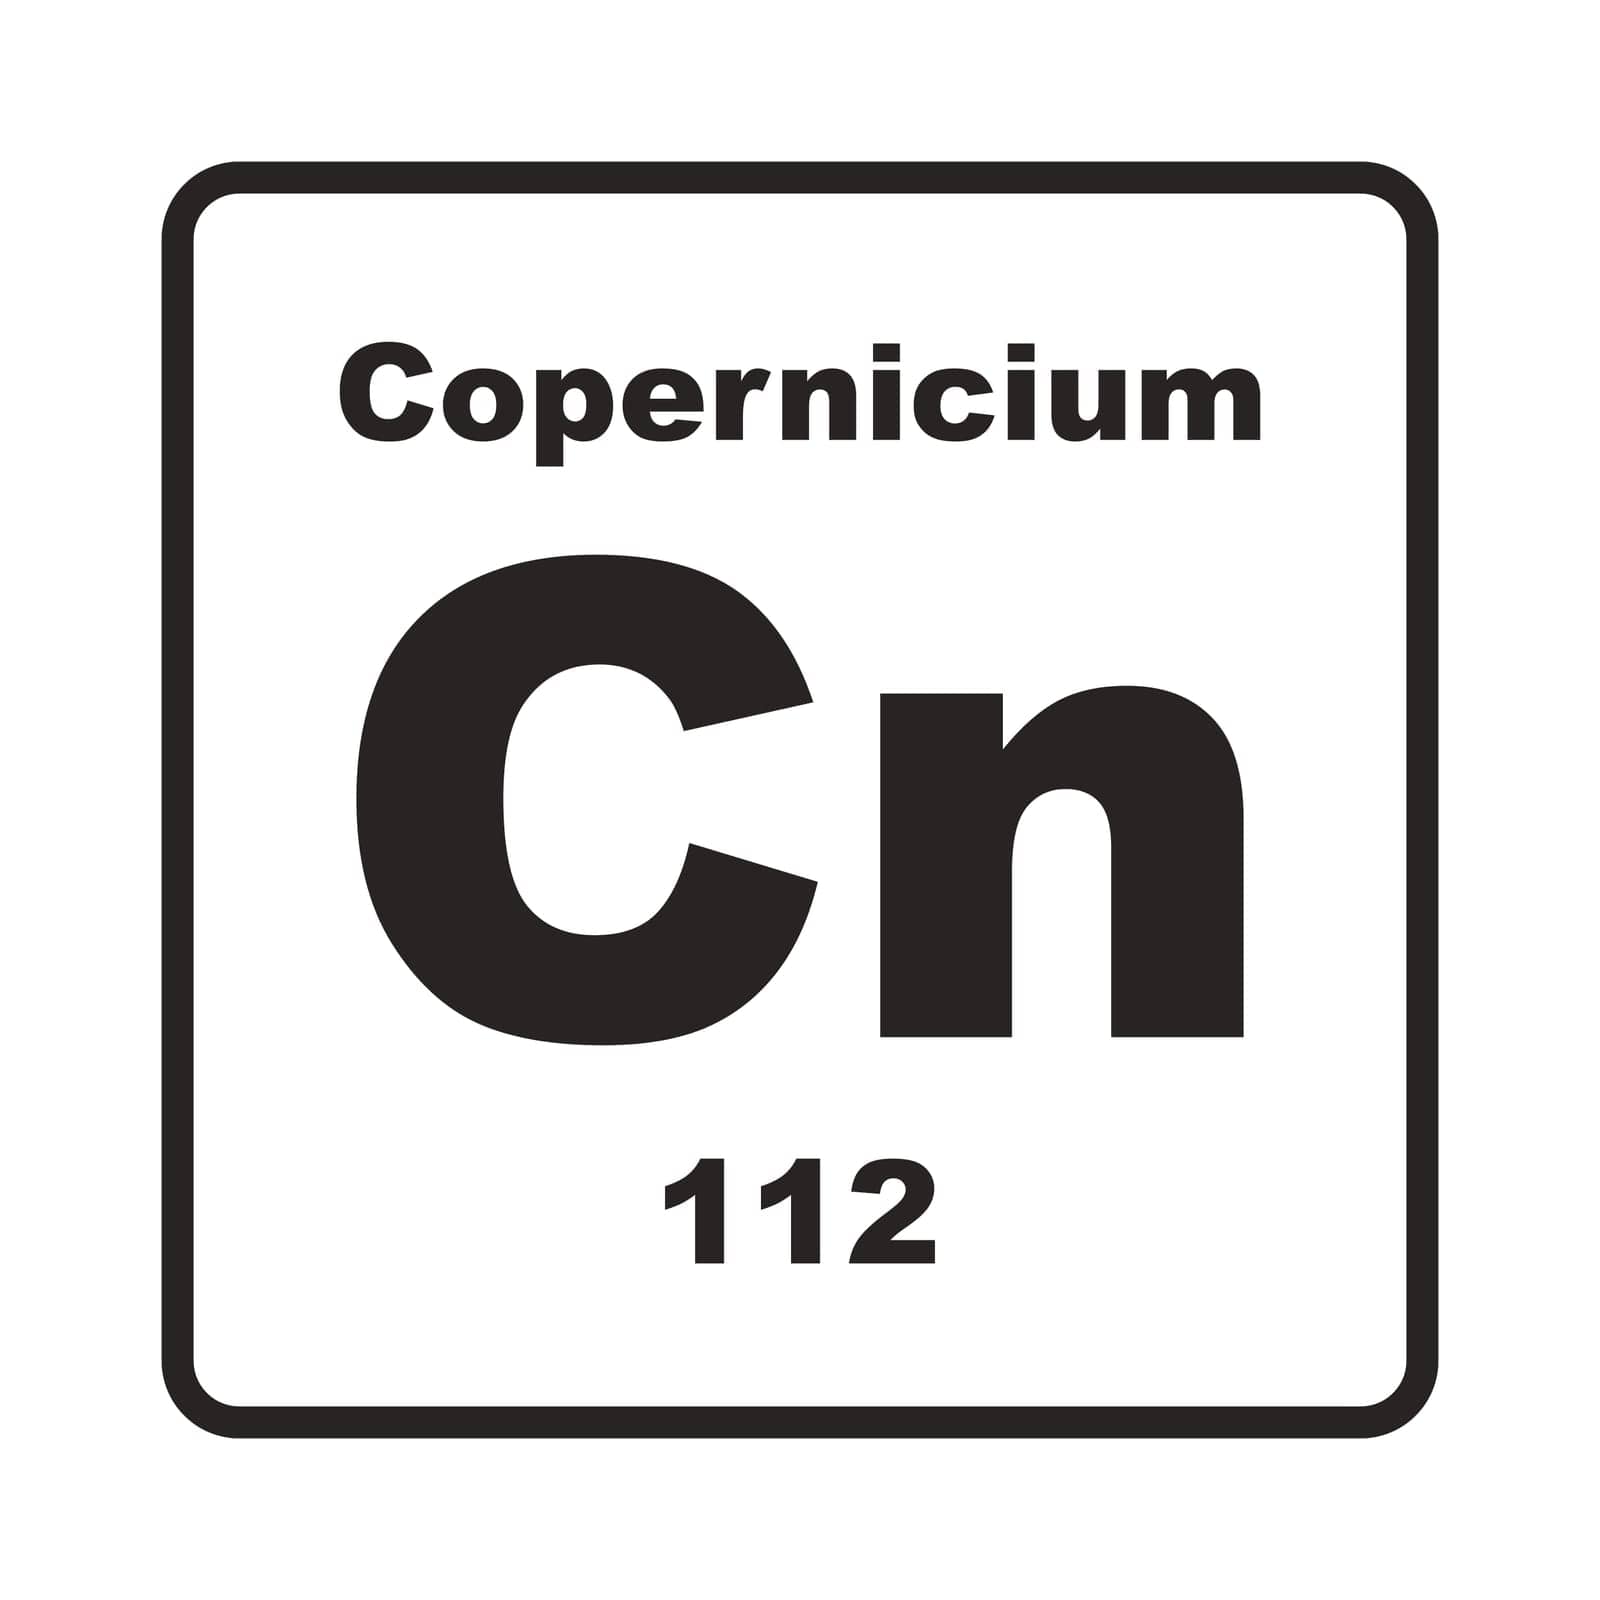 Copernicium element icon by rnking